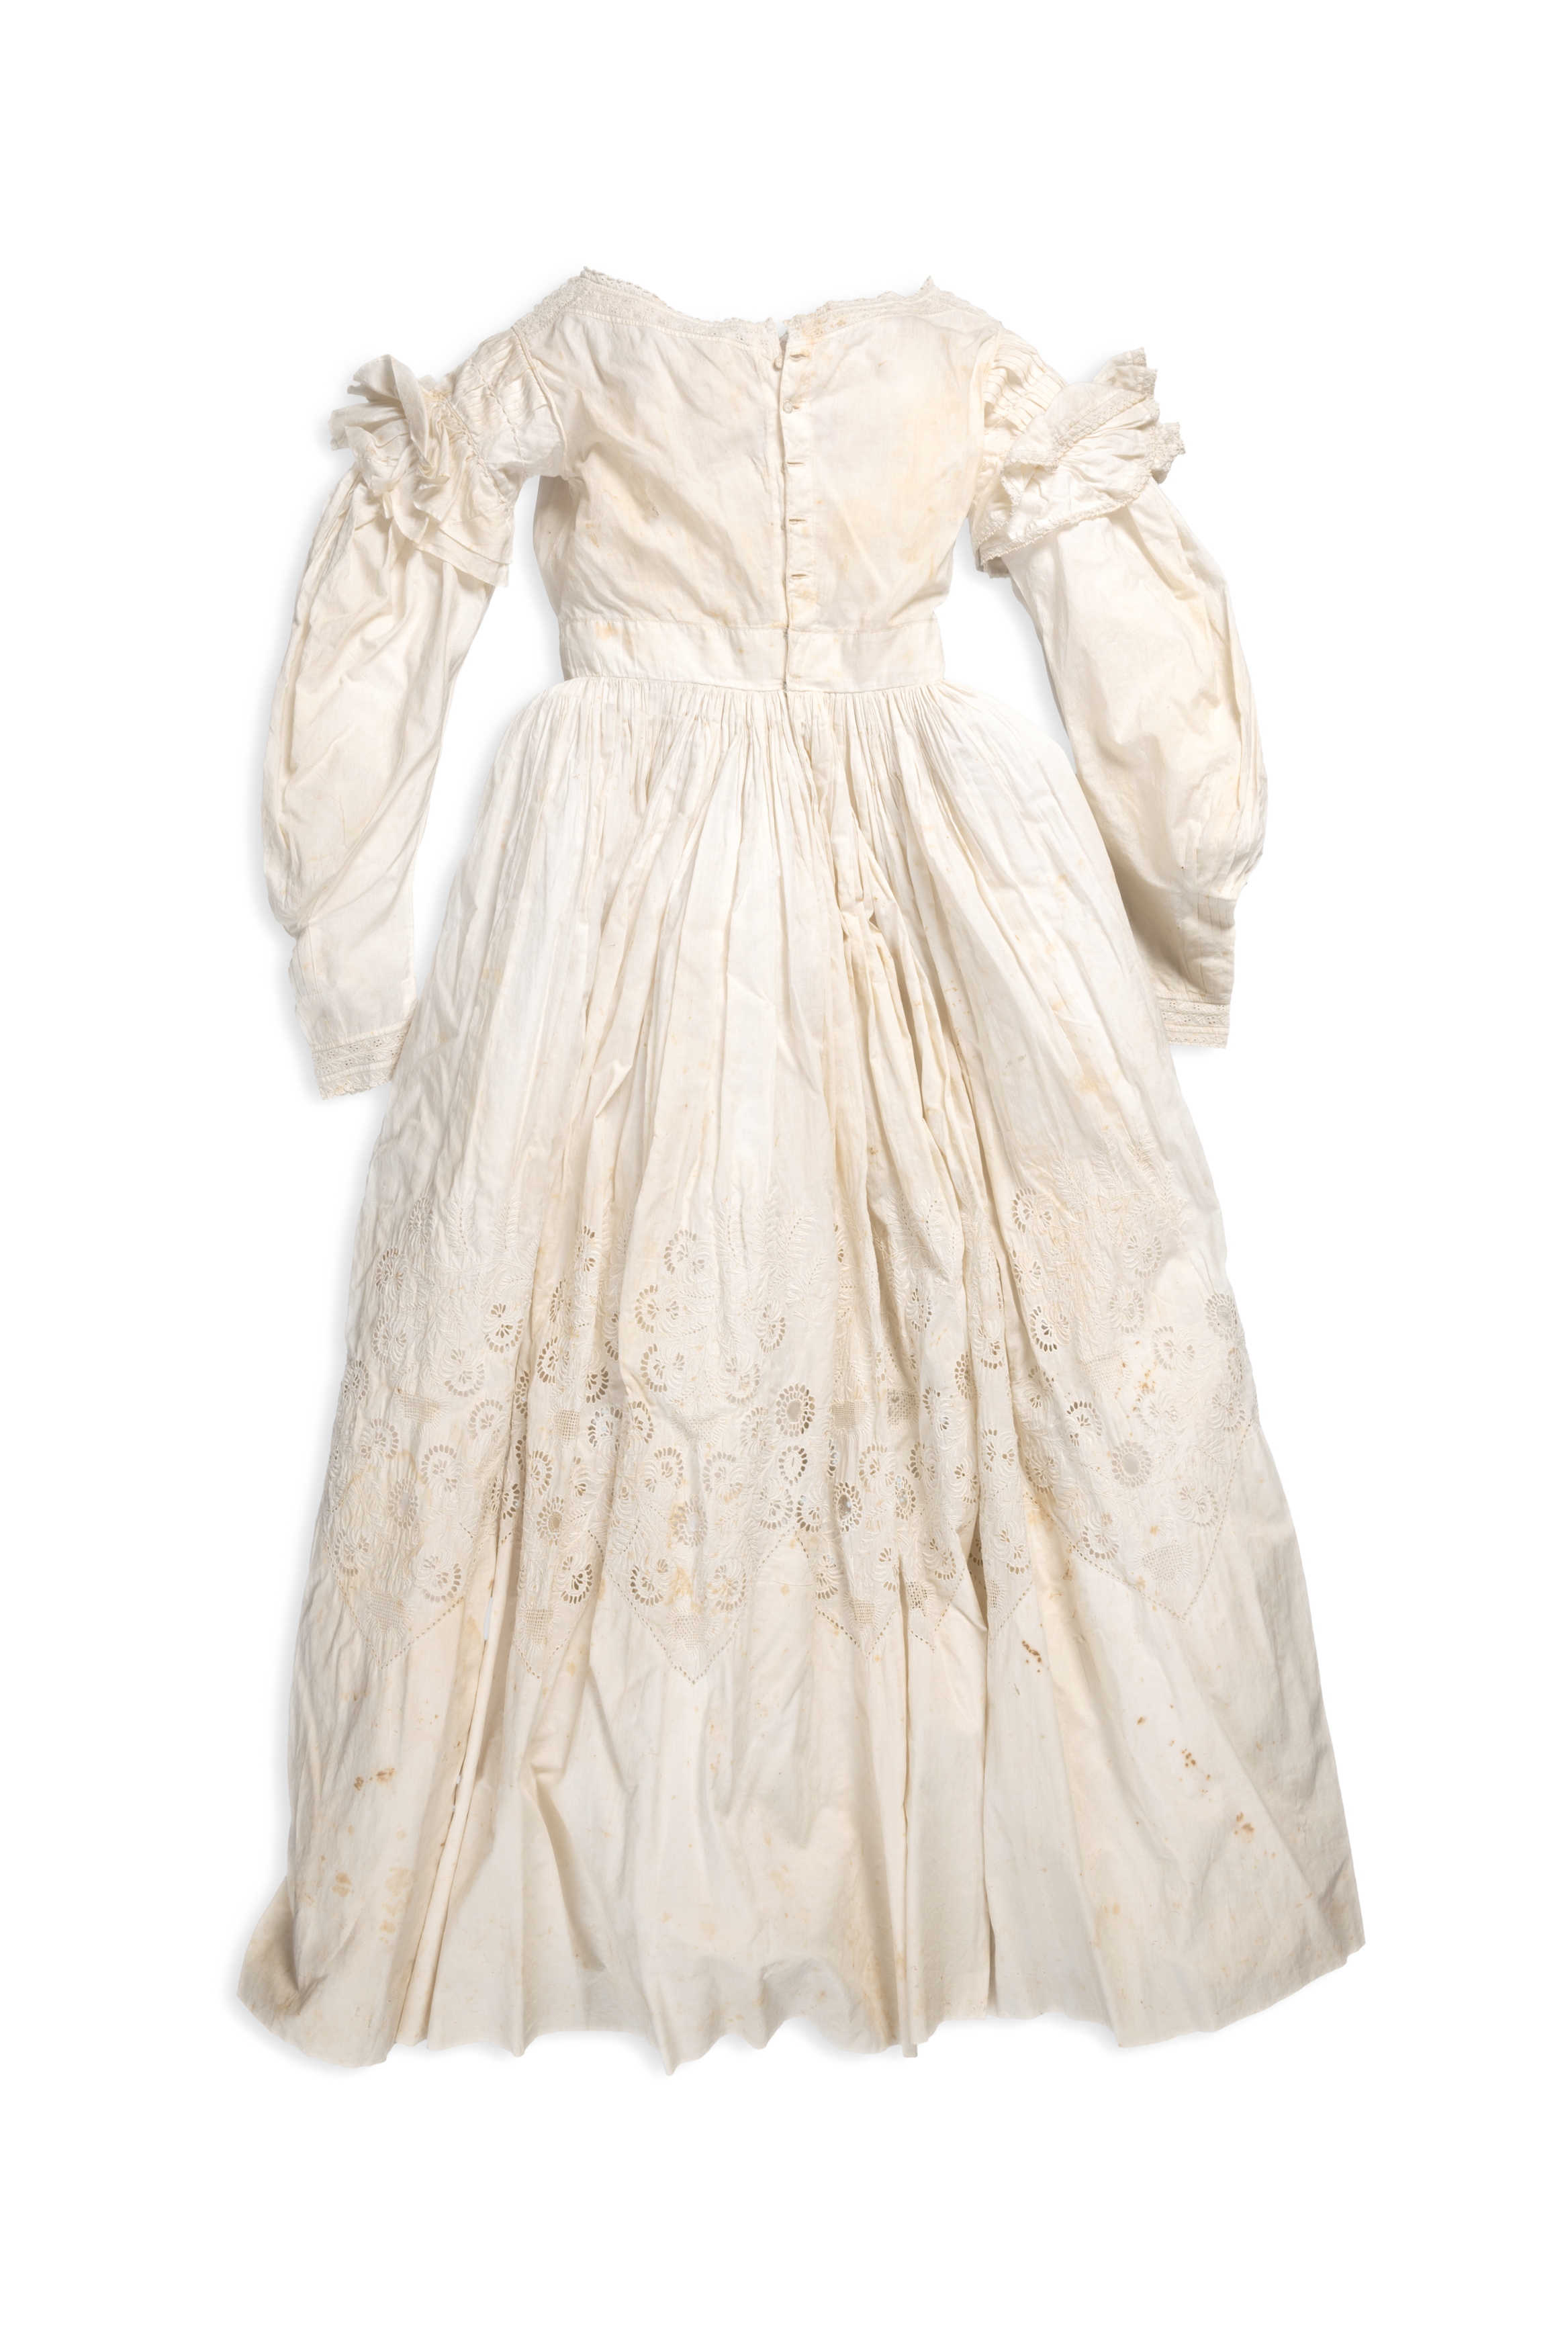 Cotton dress probably worn by Julia Johnston